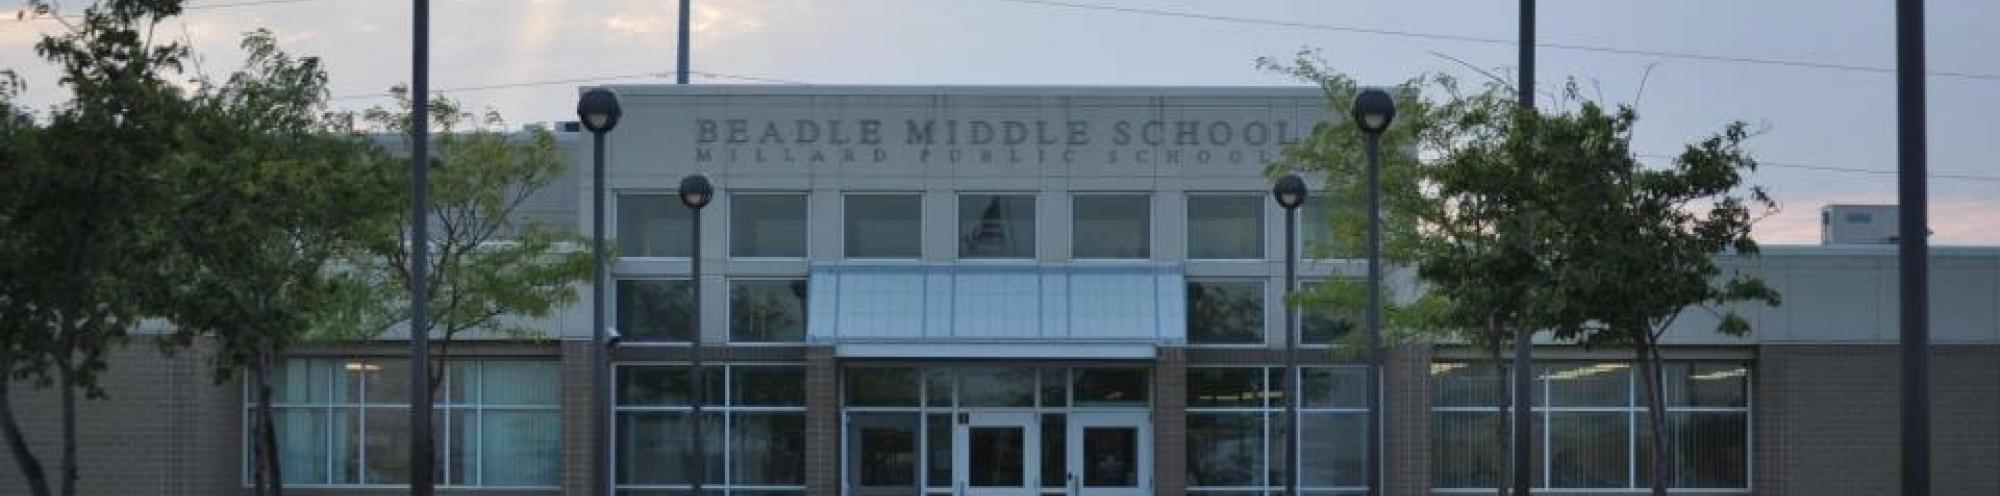 Image of Beadle Middle School